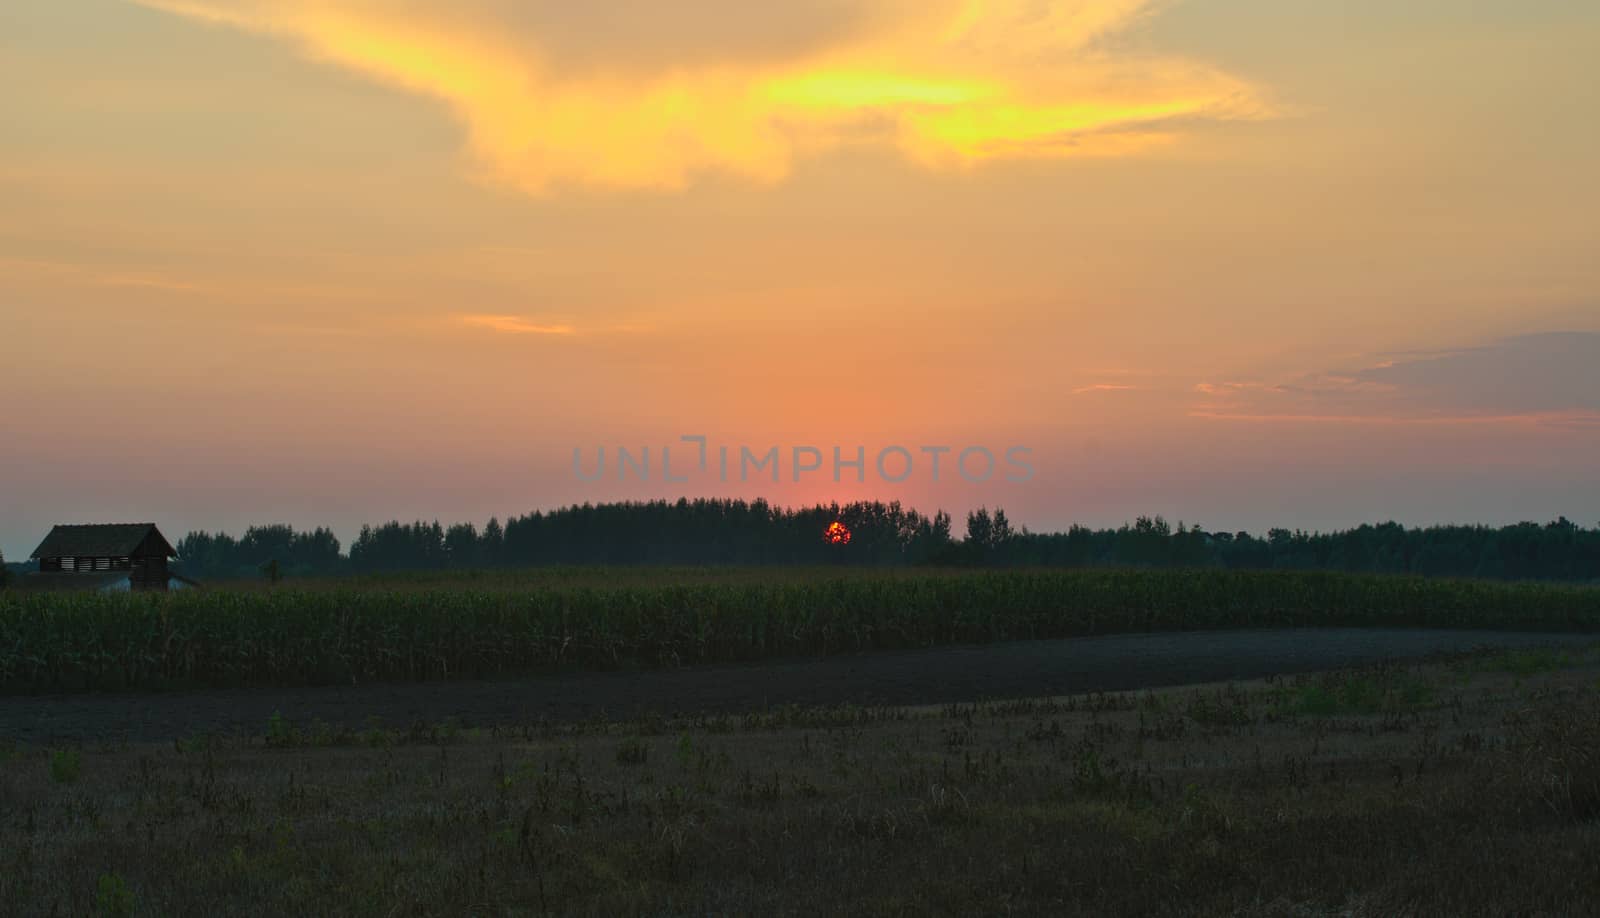 Colorful sunset over corn field, summer landscape